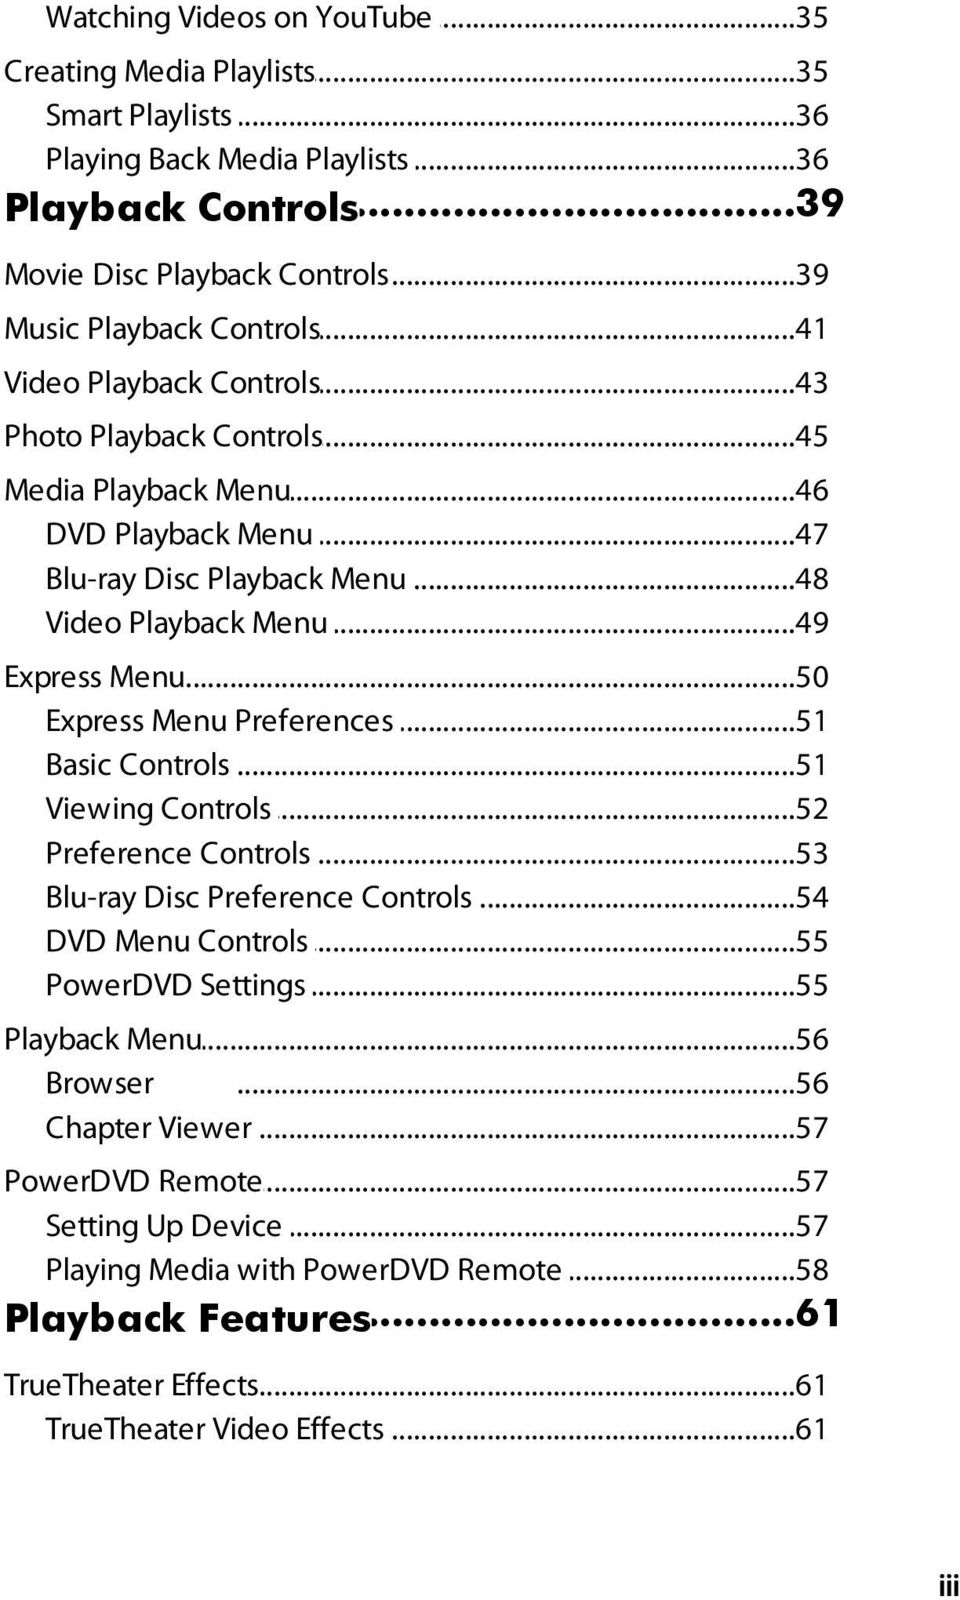 ..50 Menu Express Menu Preferences...51 Basic Controls...51 Viewing Controls...52 Preference Controls...53 Blu-ray Disc Preference...54 Controls DVD Menu Controls...55 PowerDVD Settings.